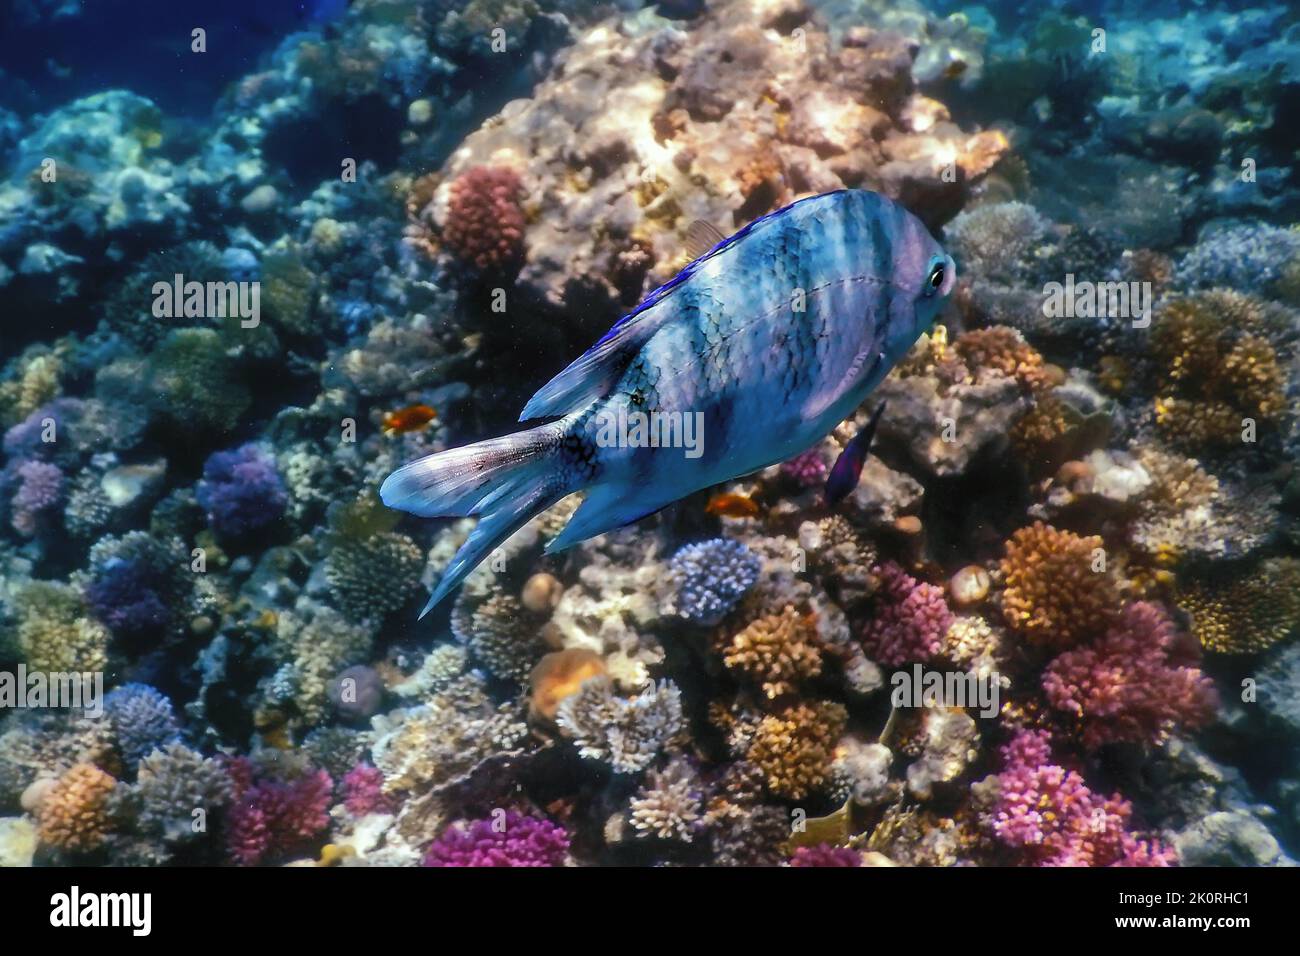 Scissortail pesce sergente (Abudefduf sexfasciatus) rigettò damselfish sott'acqua, acque tropicali, vita marina Foto Stock